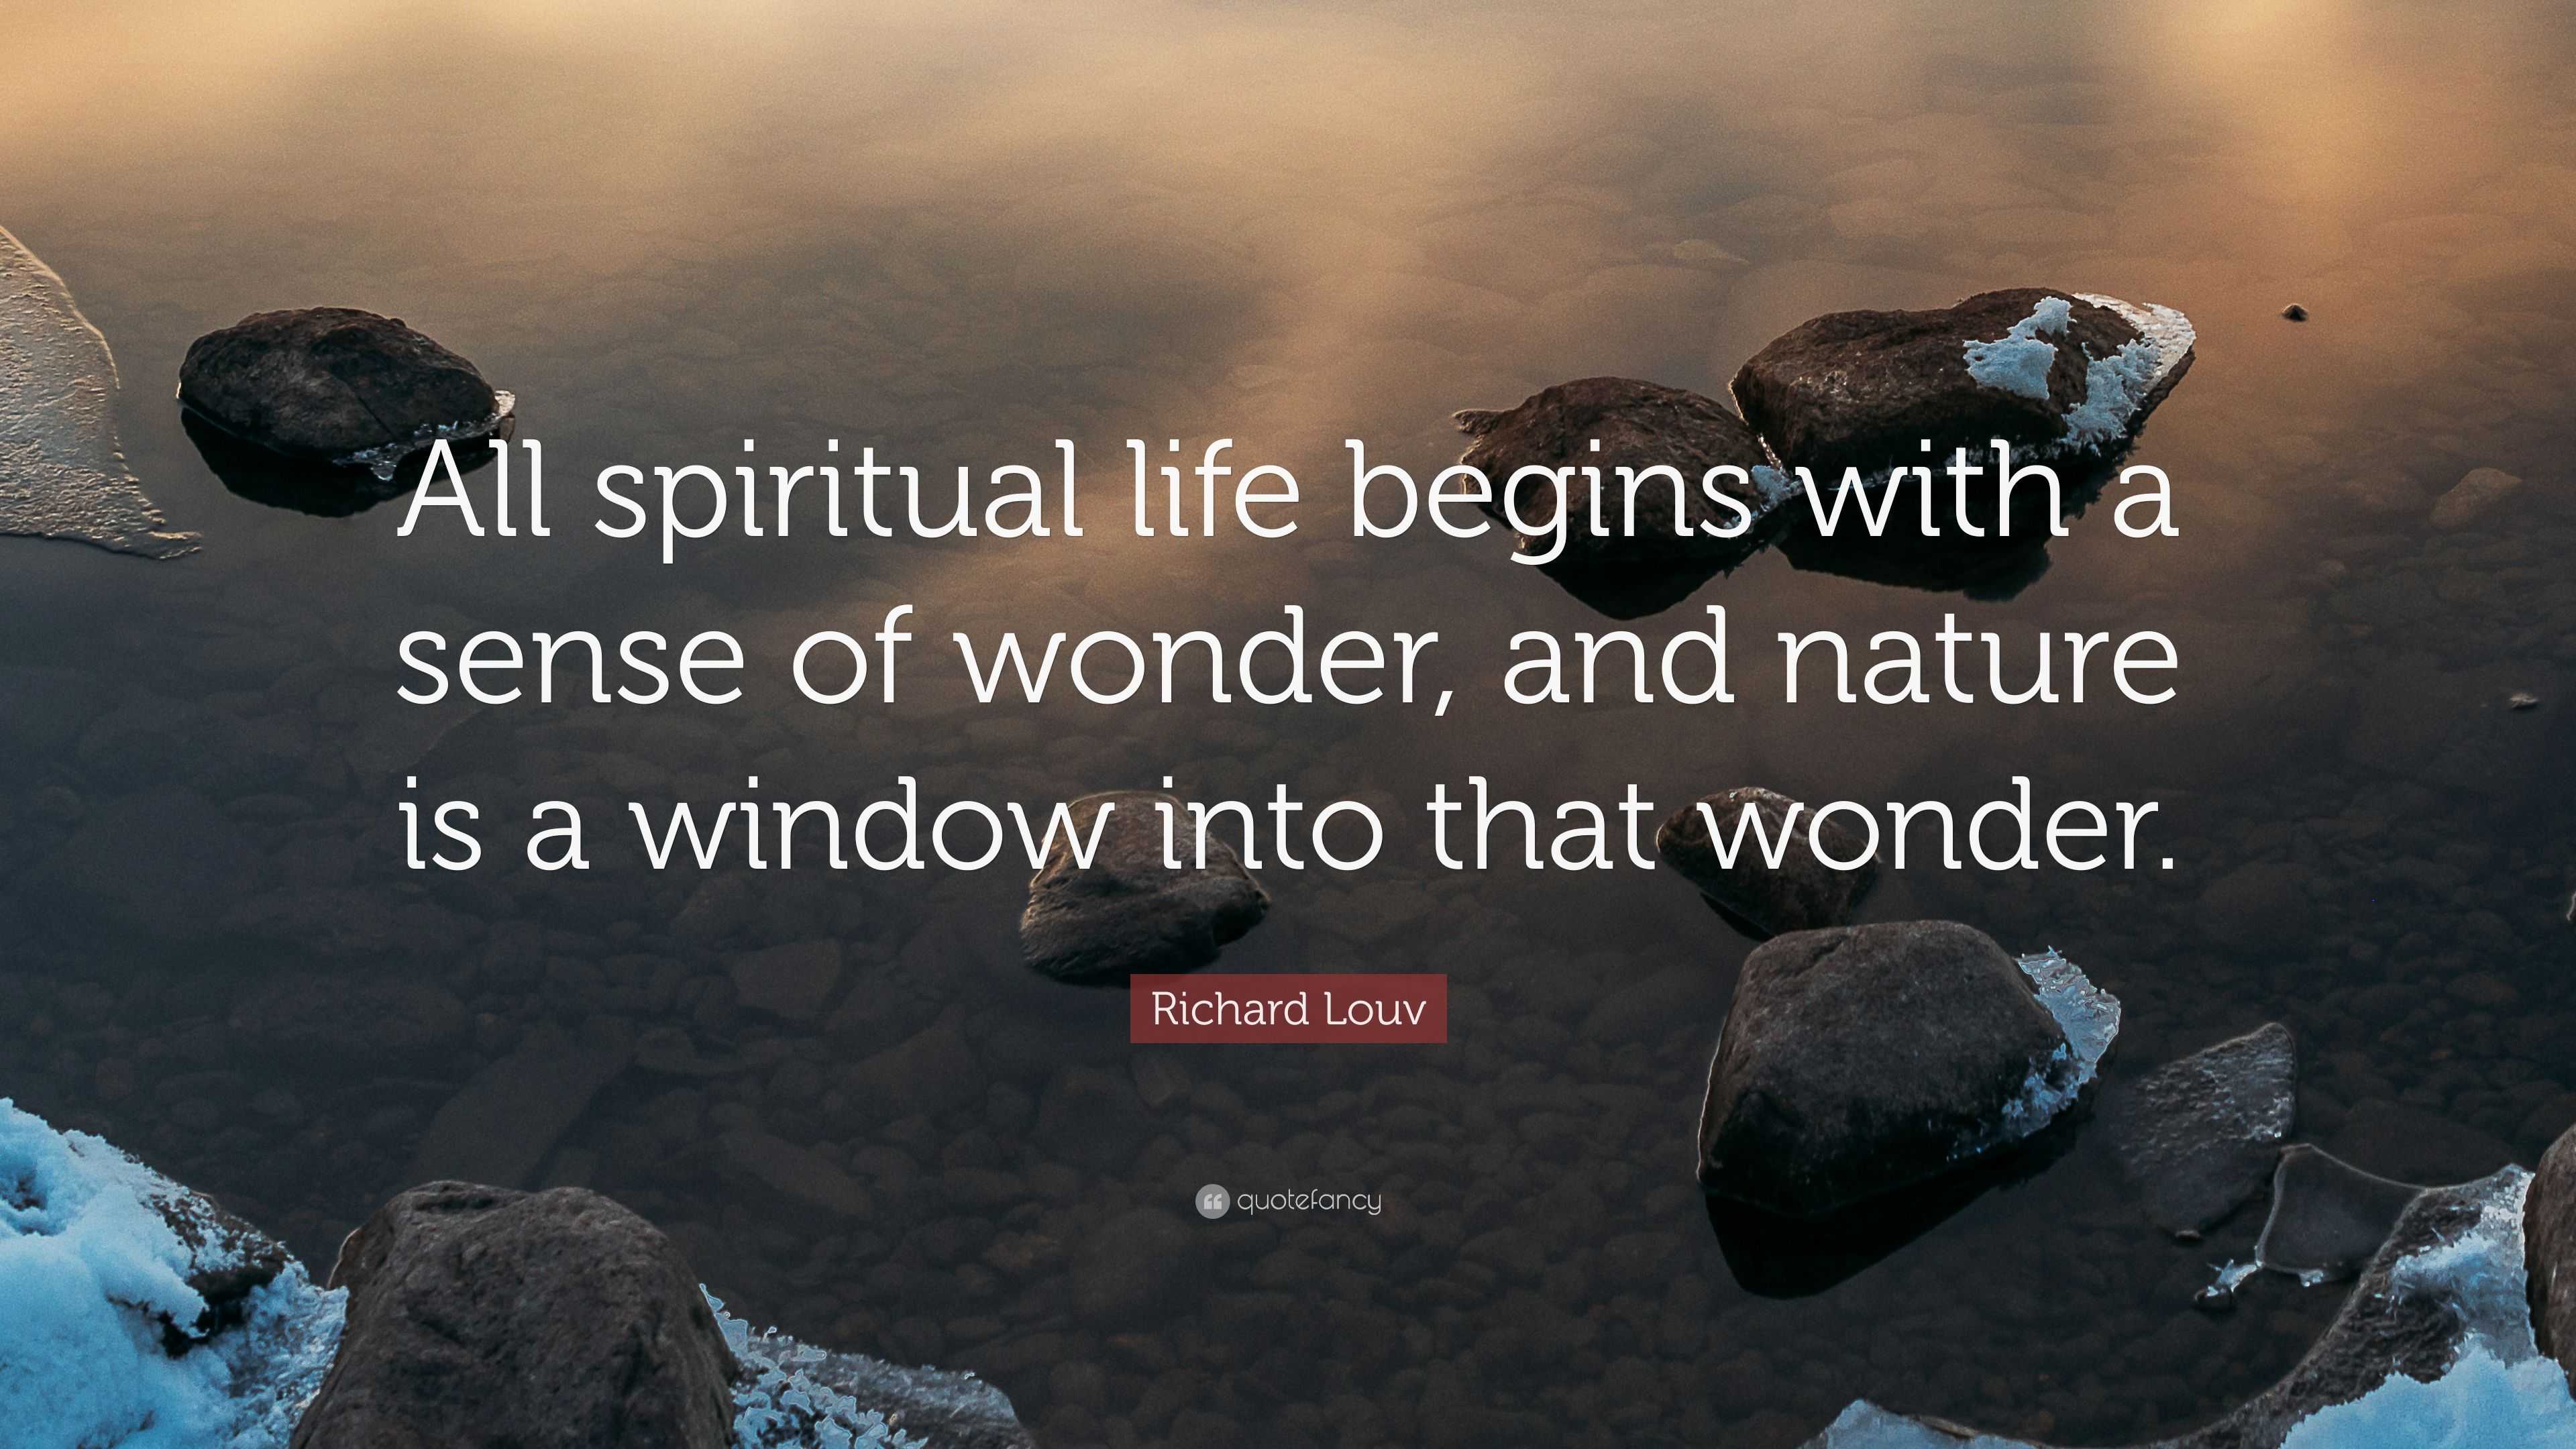 Richard Louv Quote: “All spiritual life begins with a sense of wonder